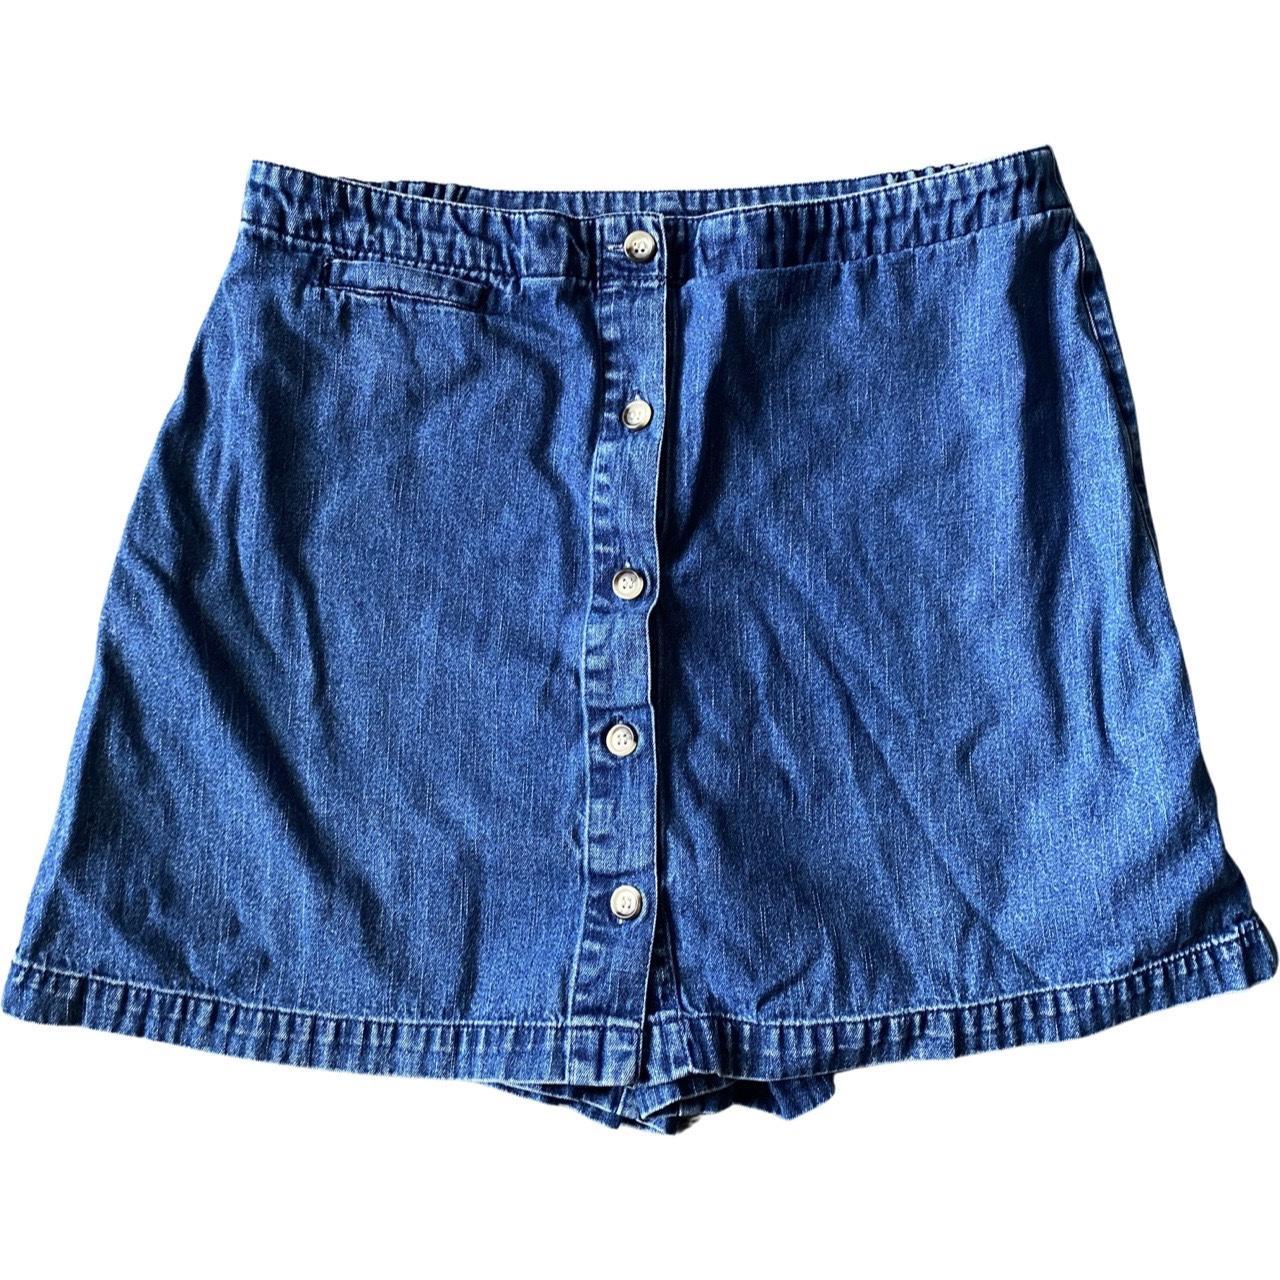 Blue skort. Skirt in the front shorts In the back - Depop